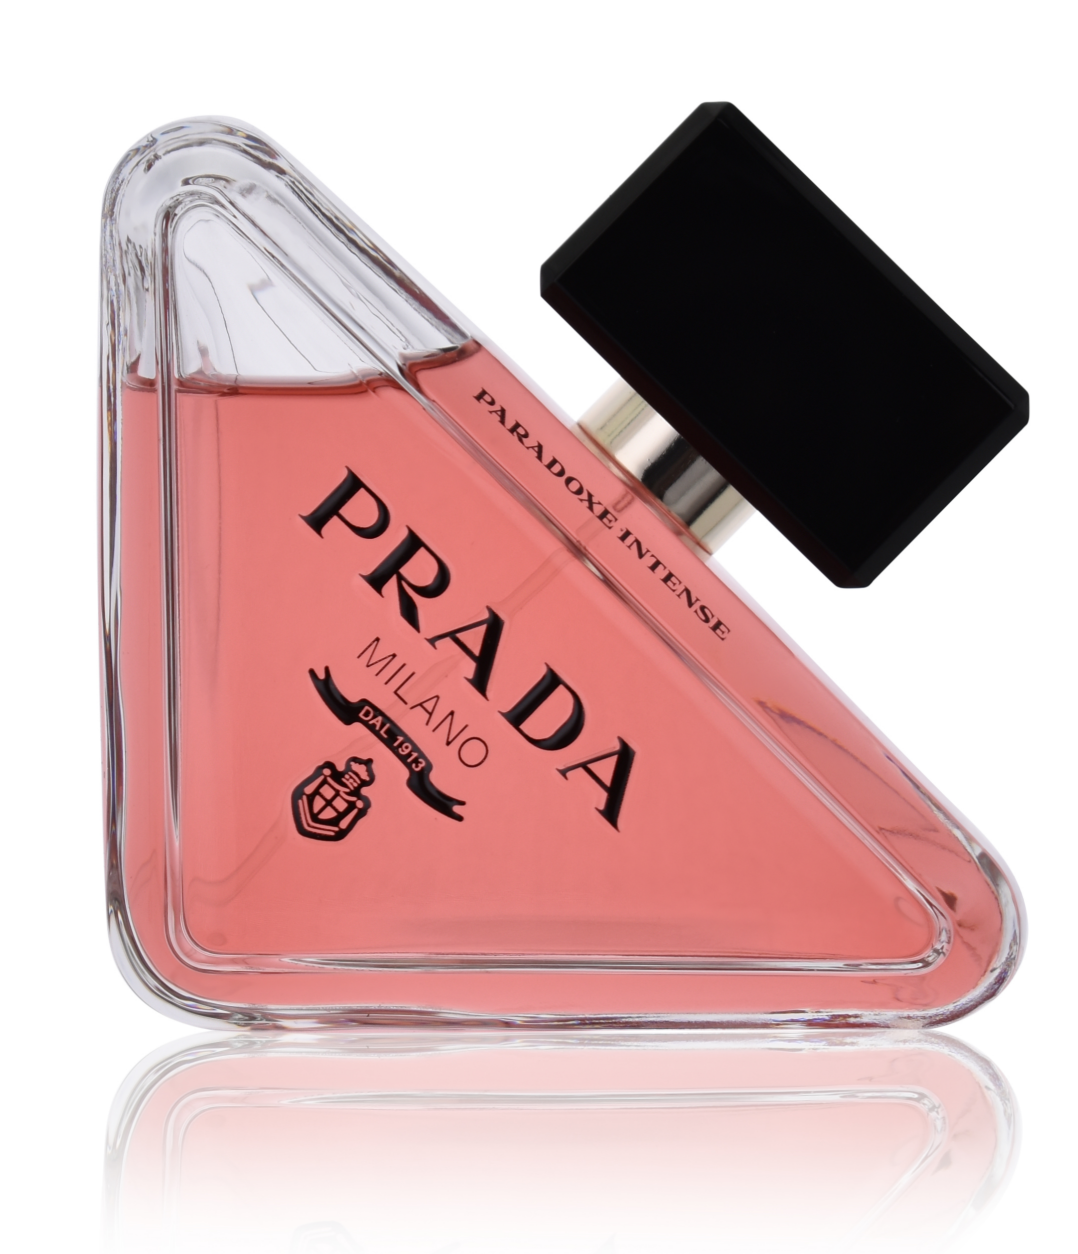 Prada Paradoxe Intense 90 ml Eau de Parfum